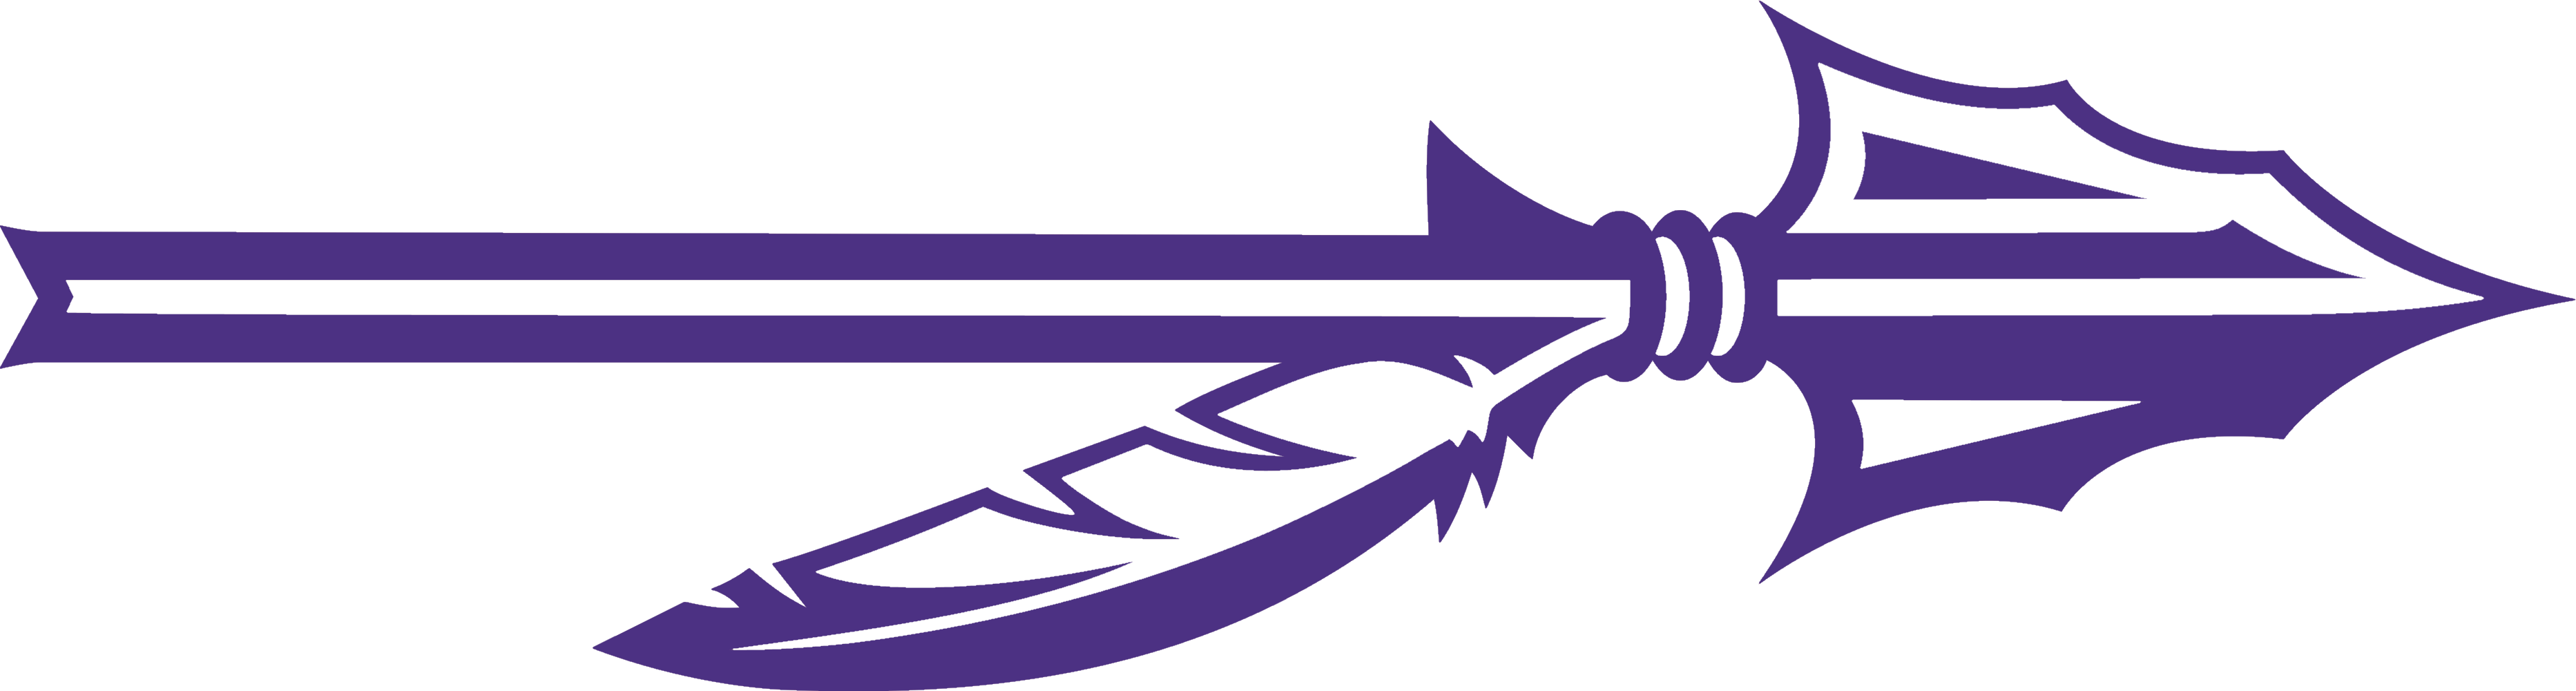 Indian Spear Football Logo - Indian Spear Football Logo - Logo Vector Online 2019